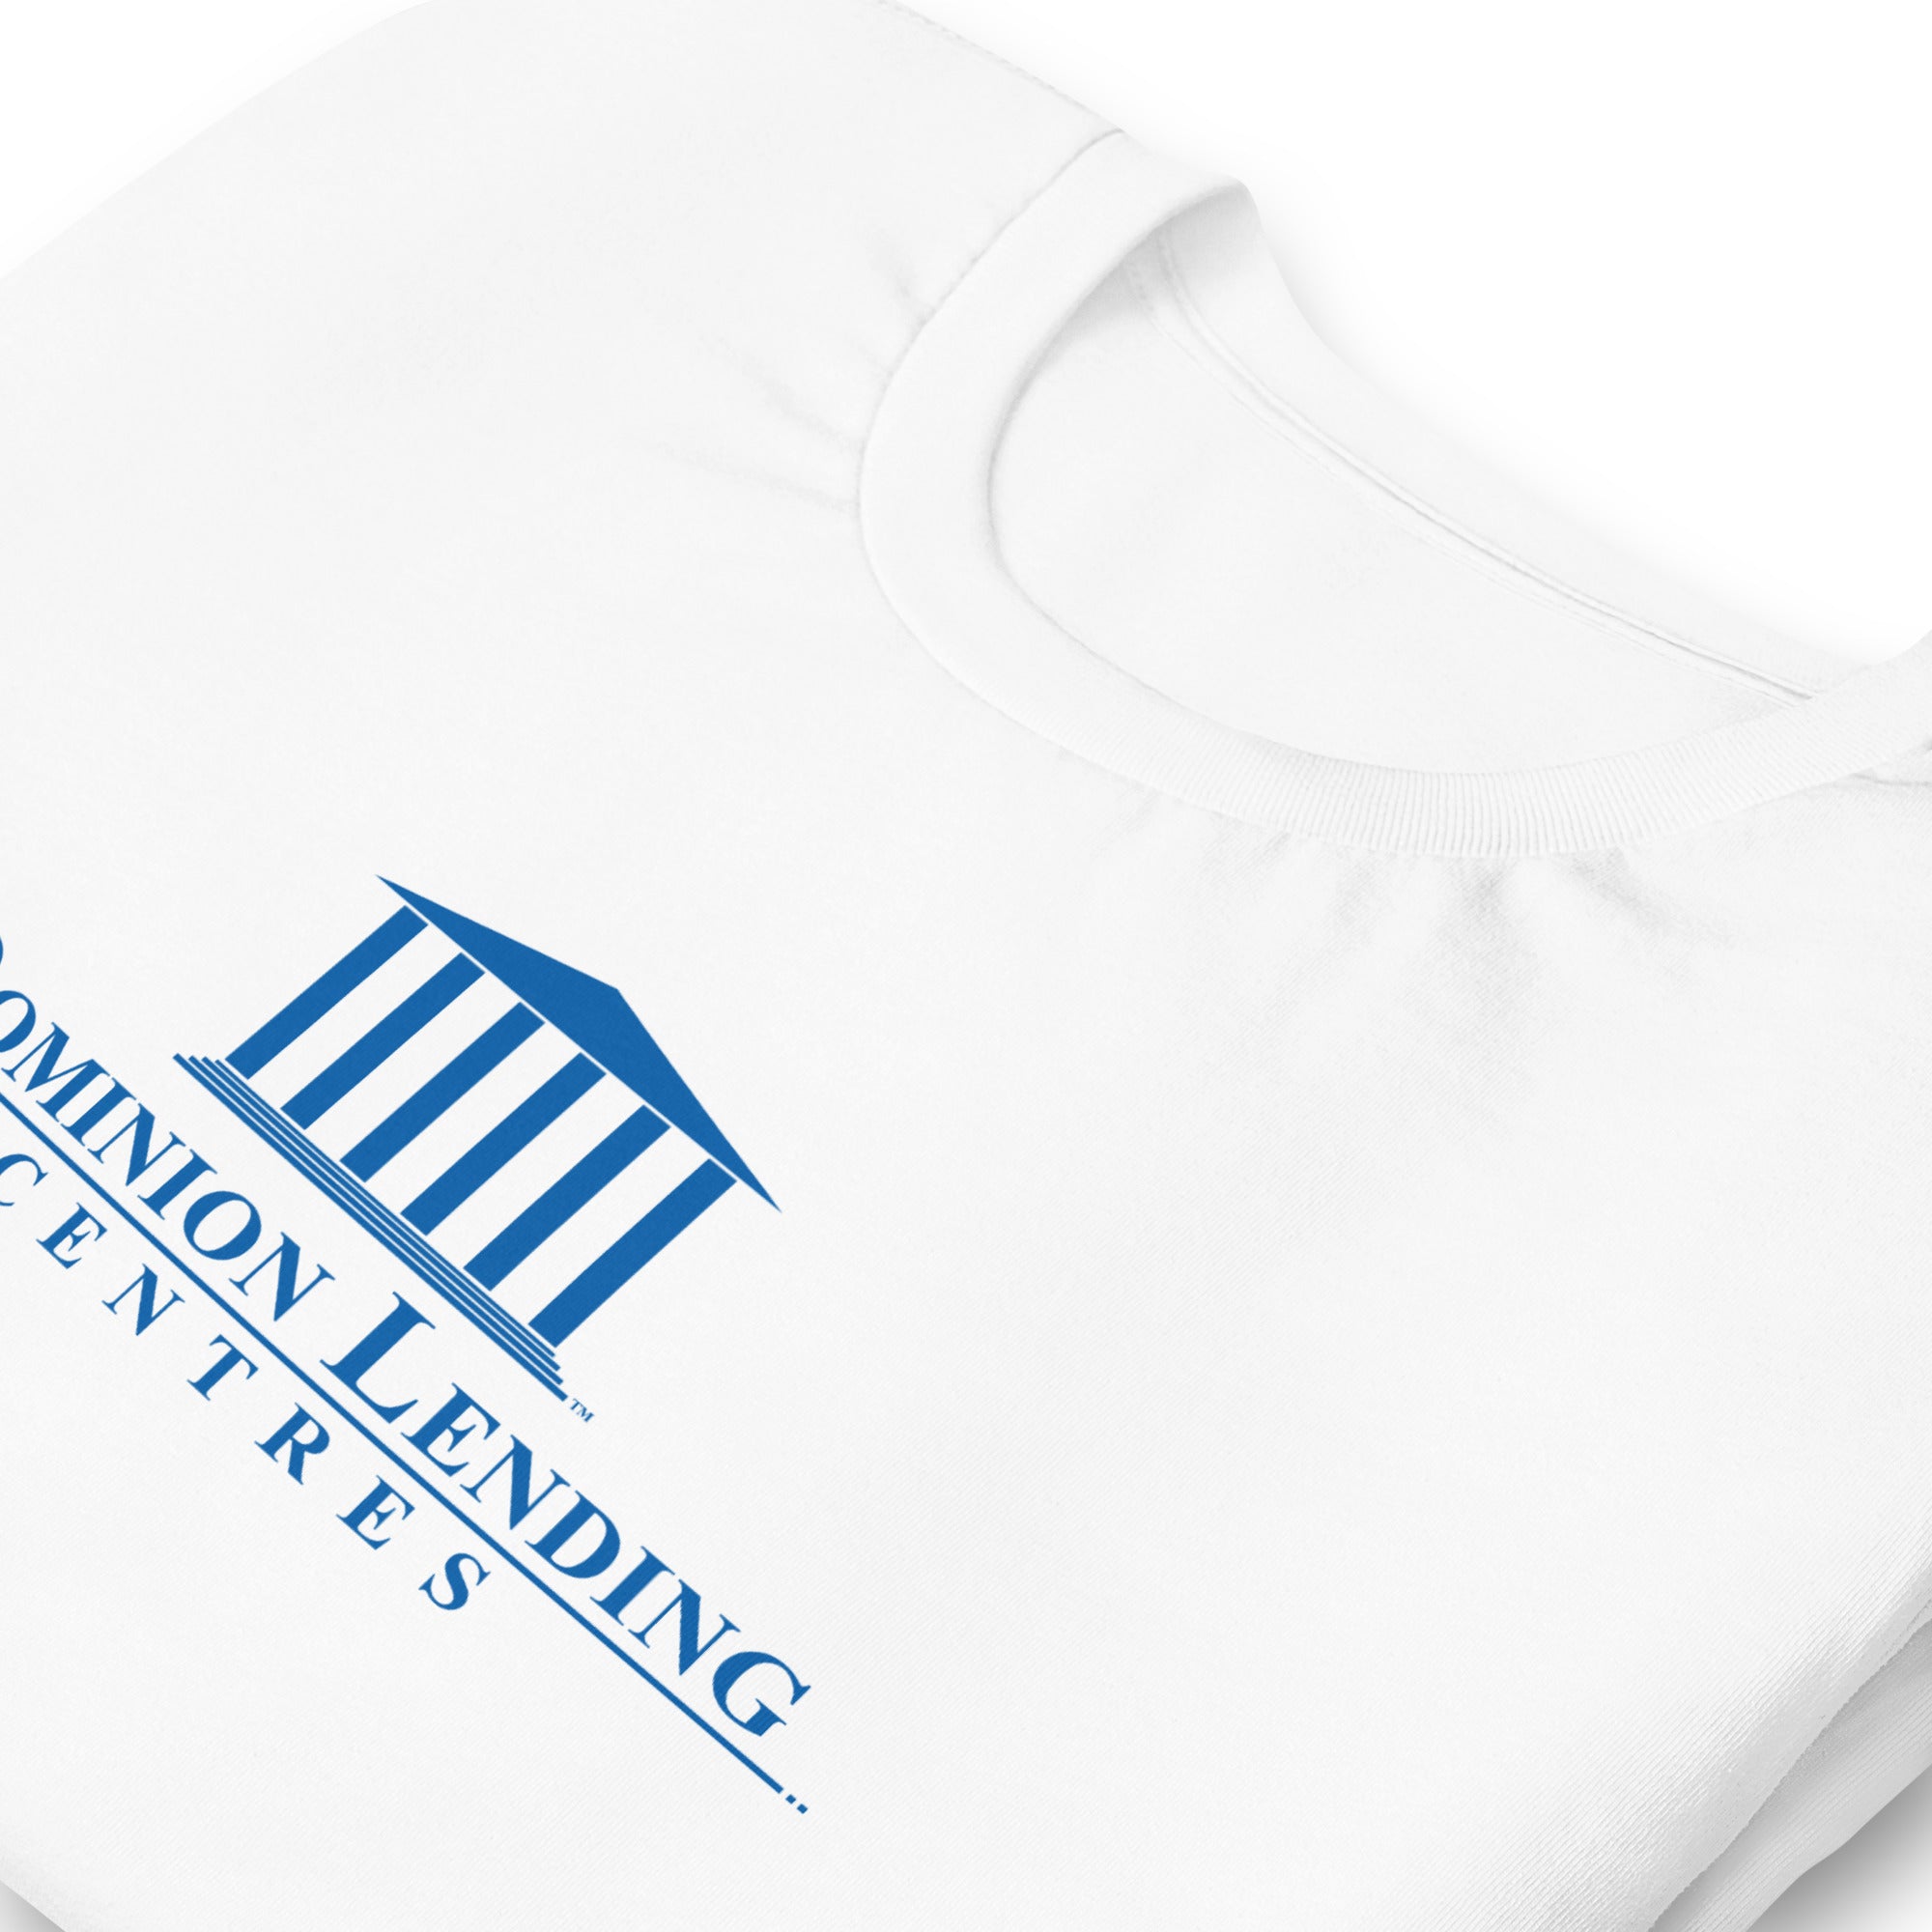 Dominion Lending Centres Unisex White T-Shirt